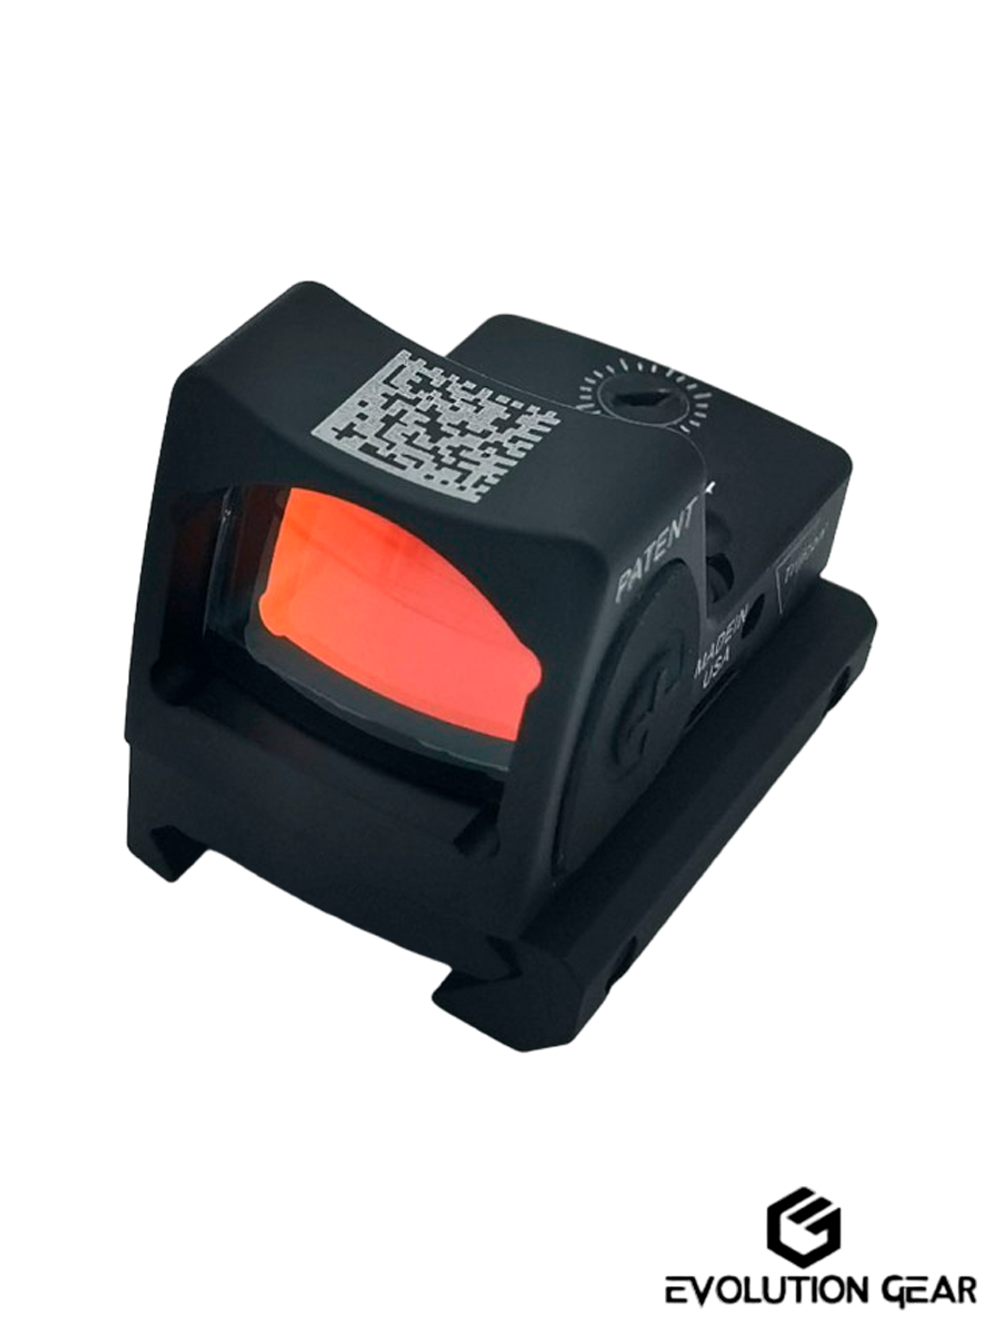 Микроколлиматор Evolution Gear RMR HRS 2.0 Red Dot. Black